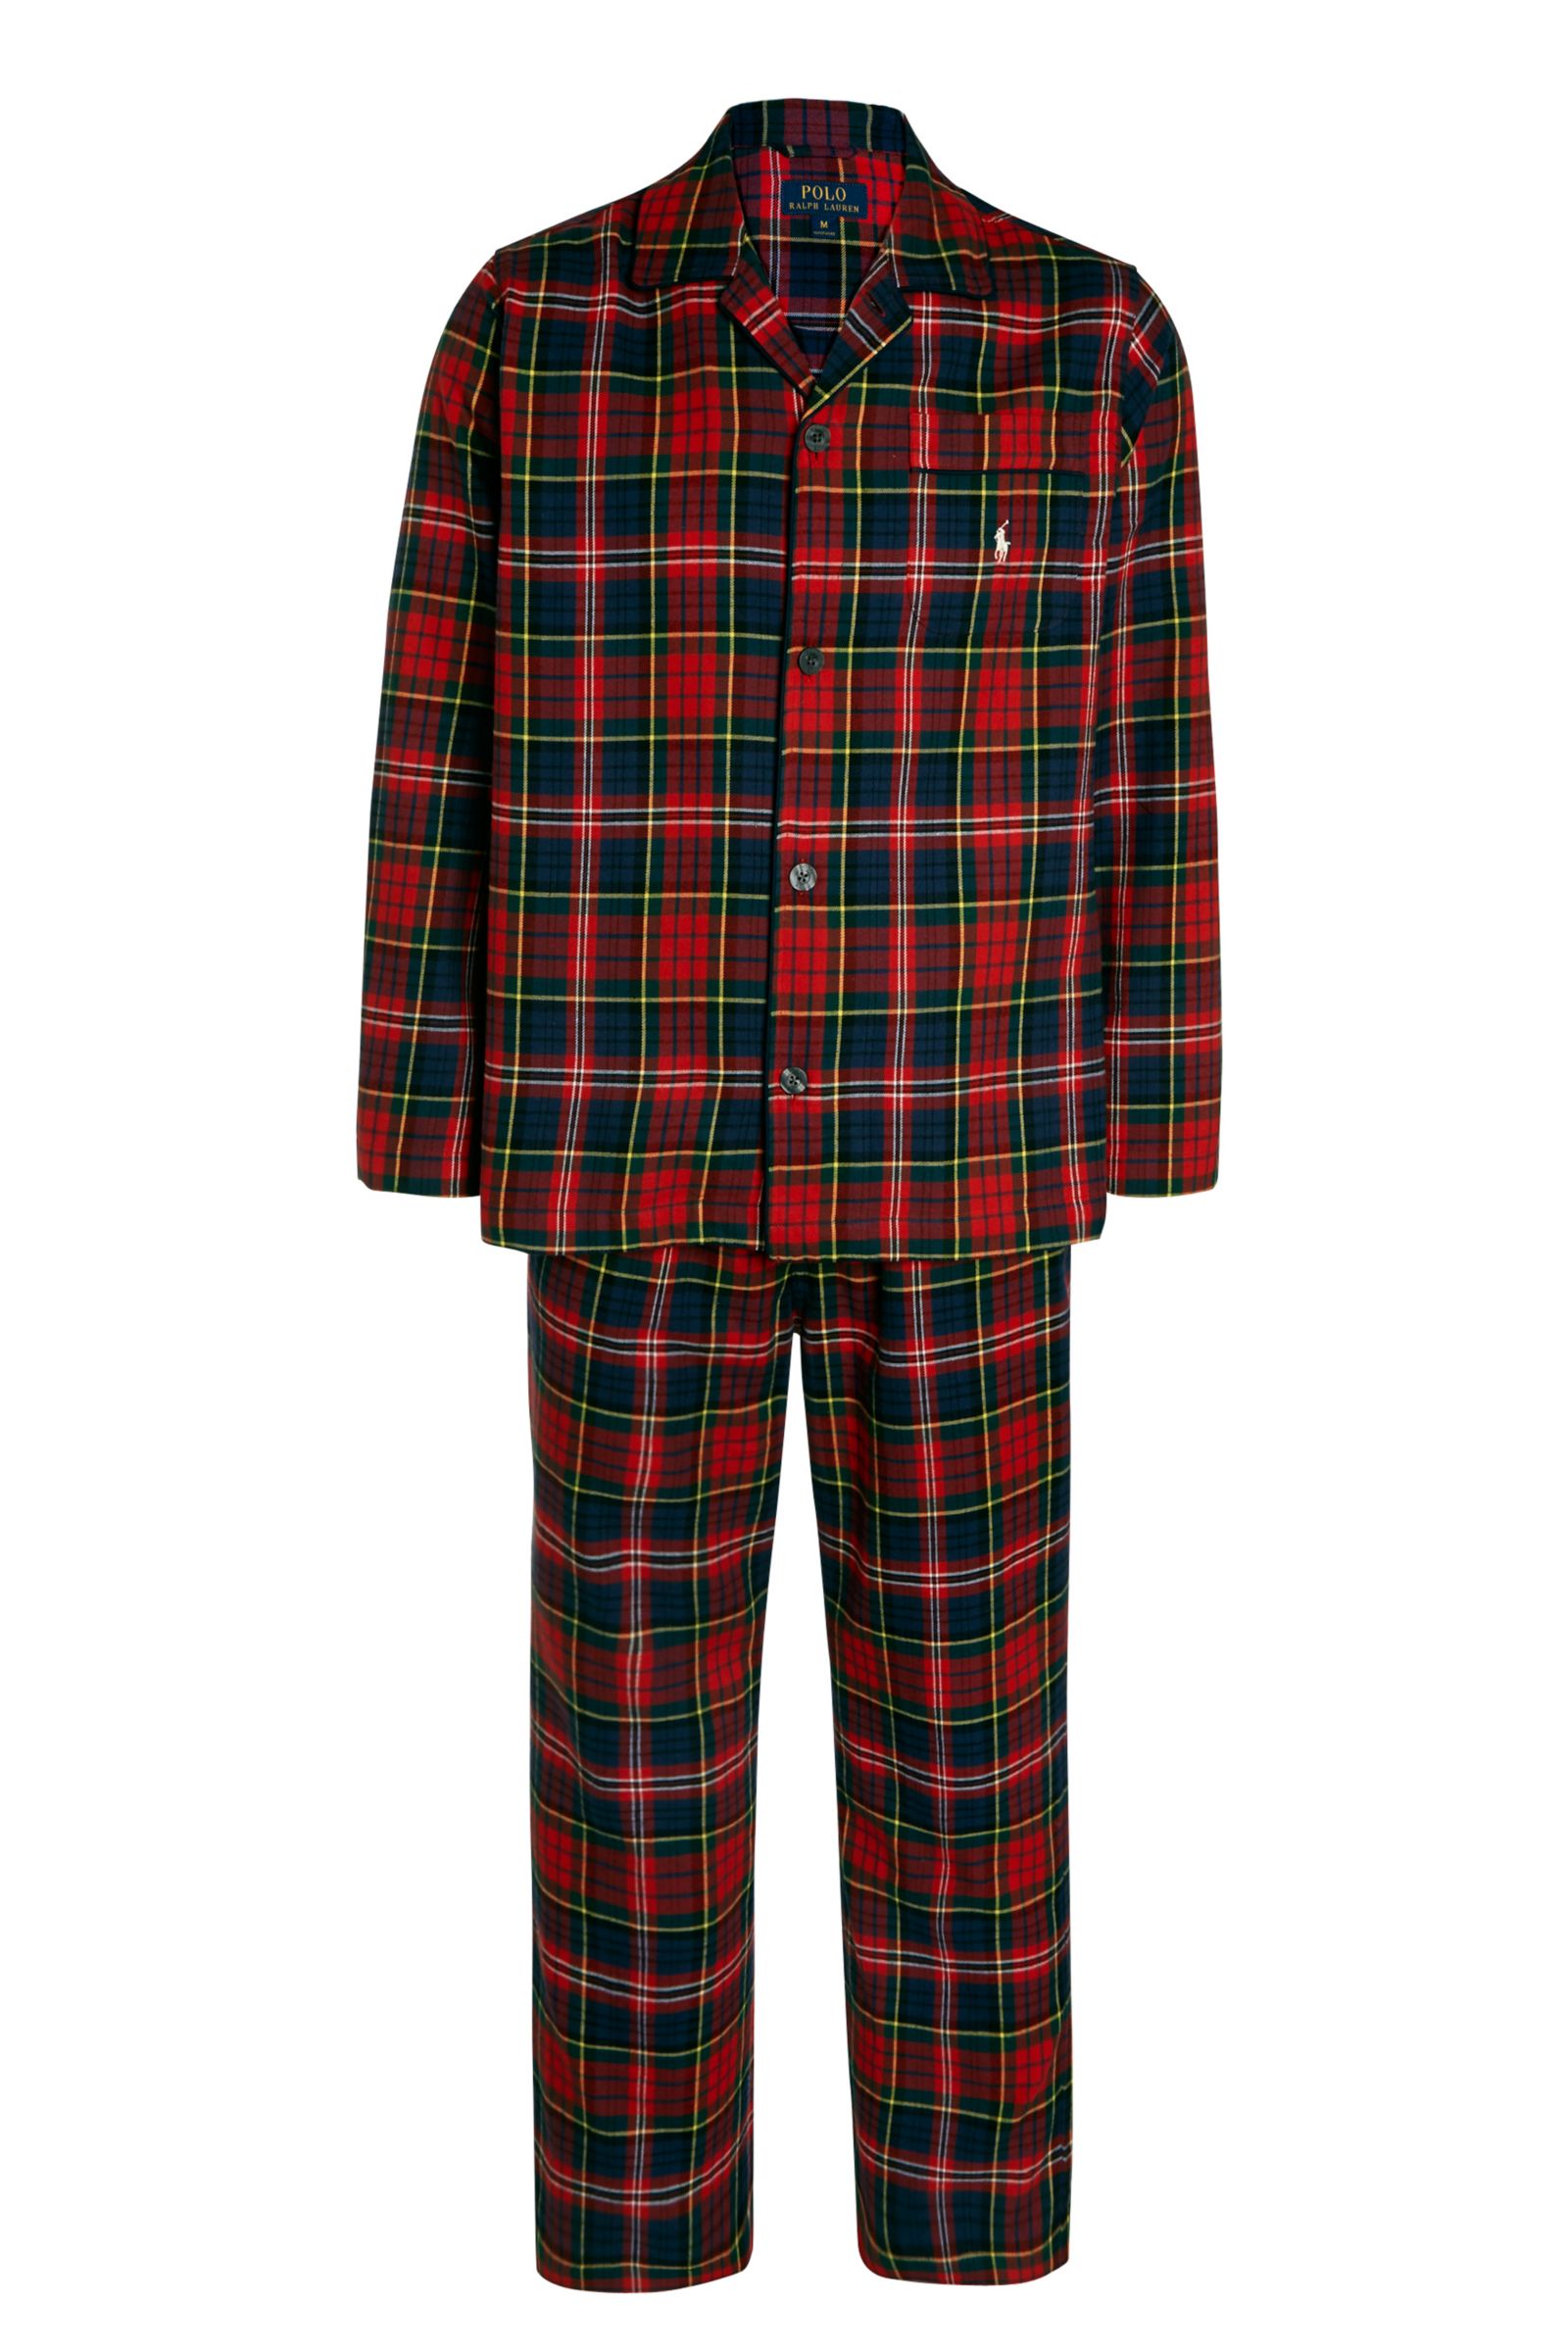 Polo Ralph Lauren Plaid Pyjama Gift Set, Red